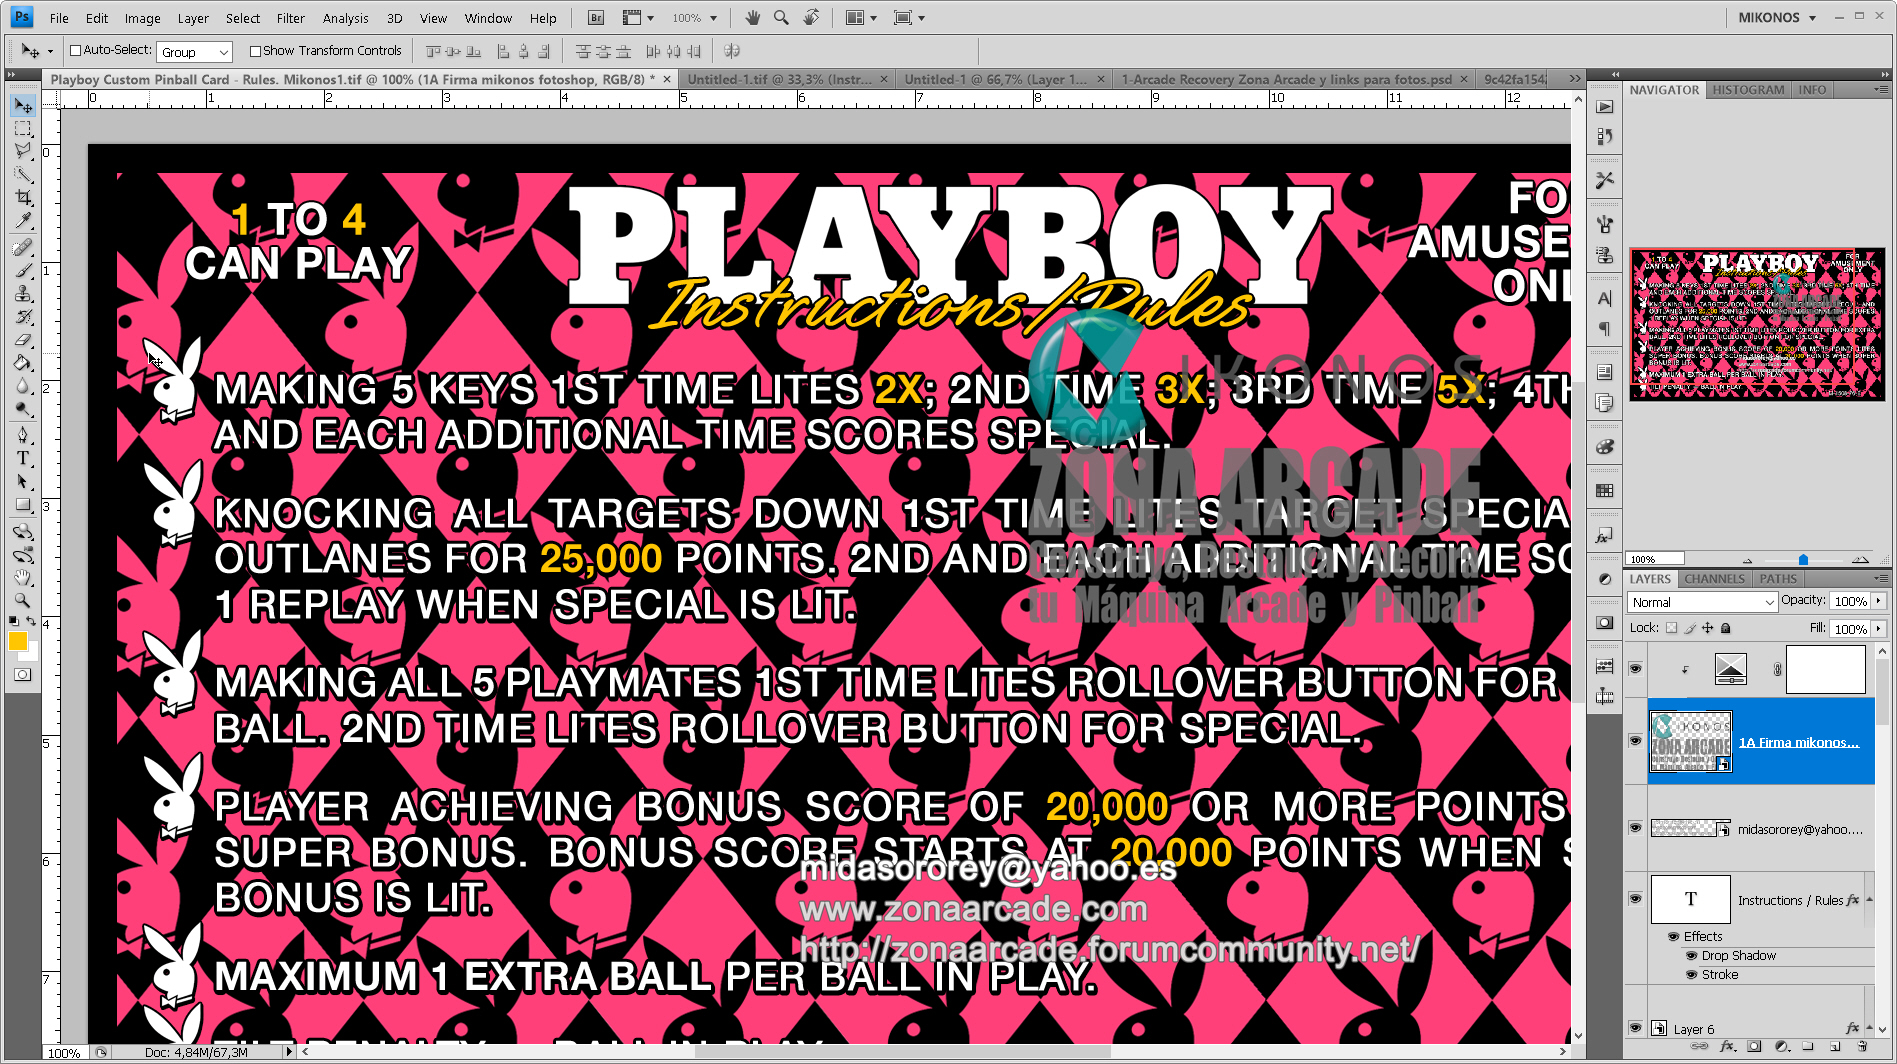 Playboy Custom Pinball Card - Rules. Mikonos2